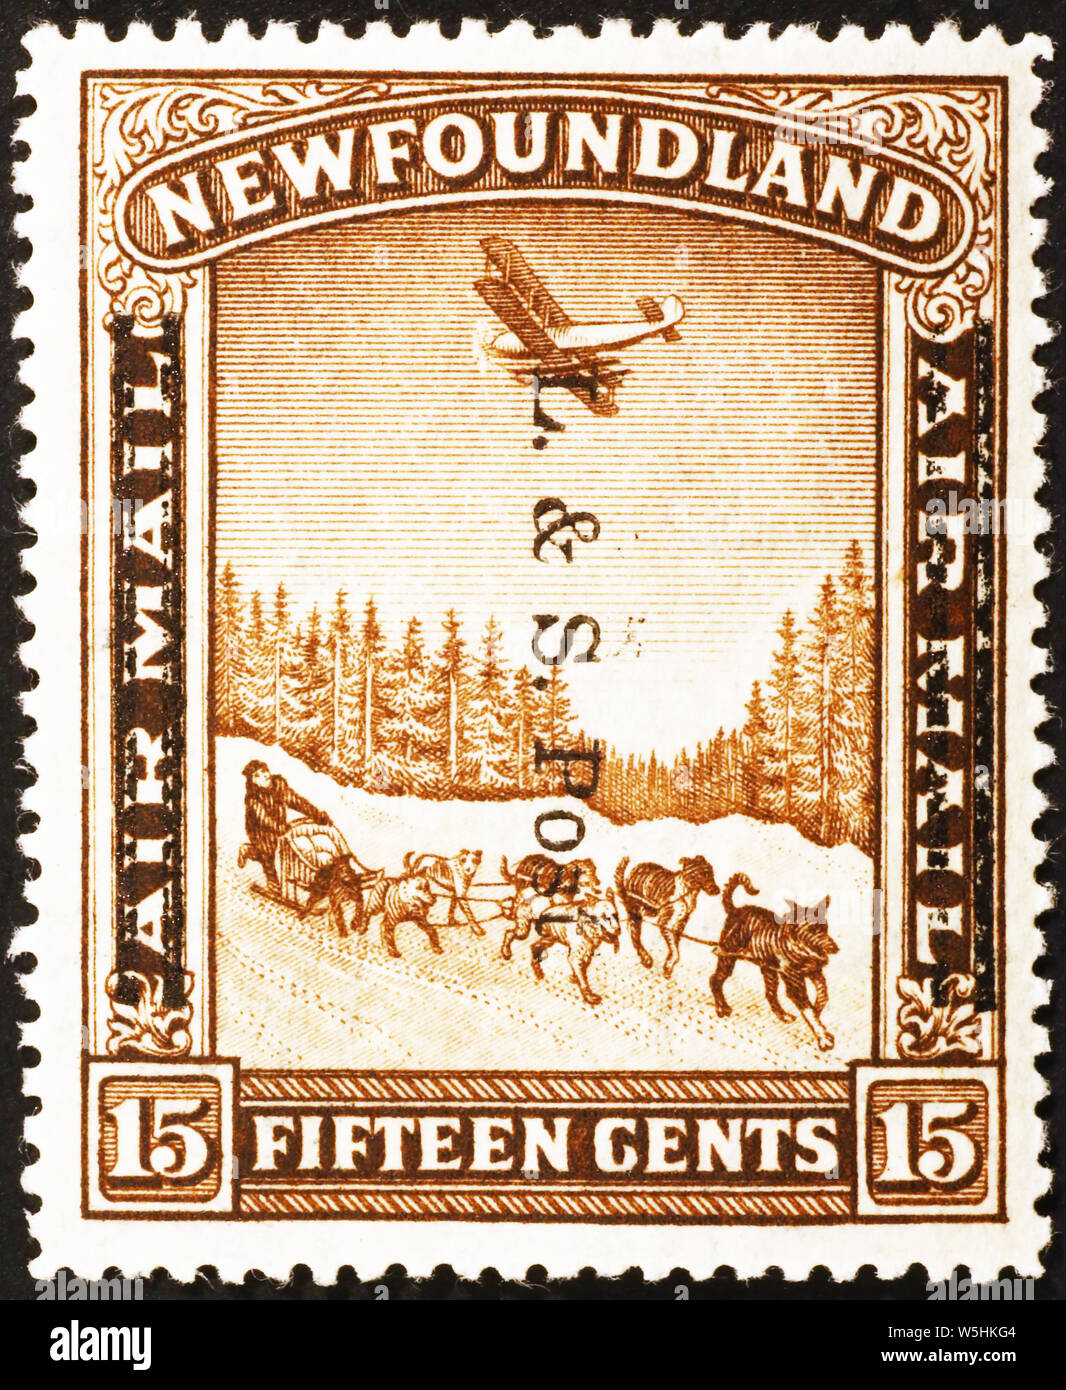 Royal Visit 1959 Canada Postage Stamp Jacques Cartier 1534 1934 Vrogue